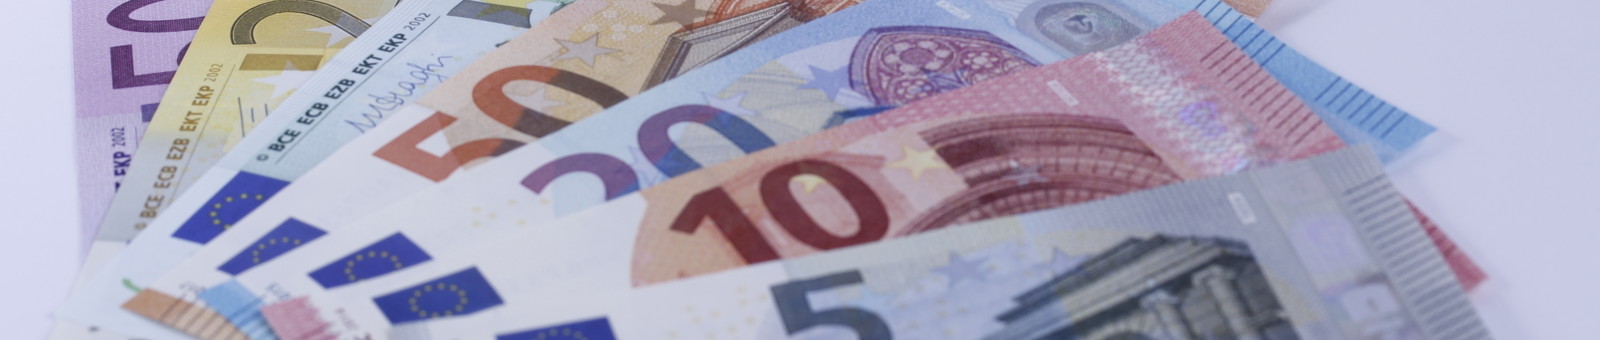     Euro-Banknoten - Währung 